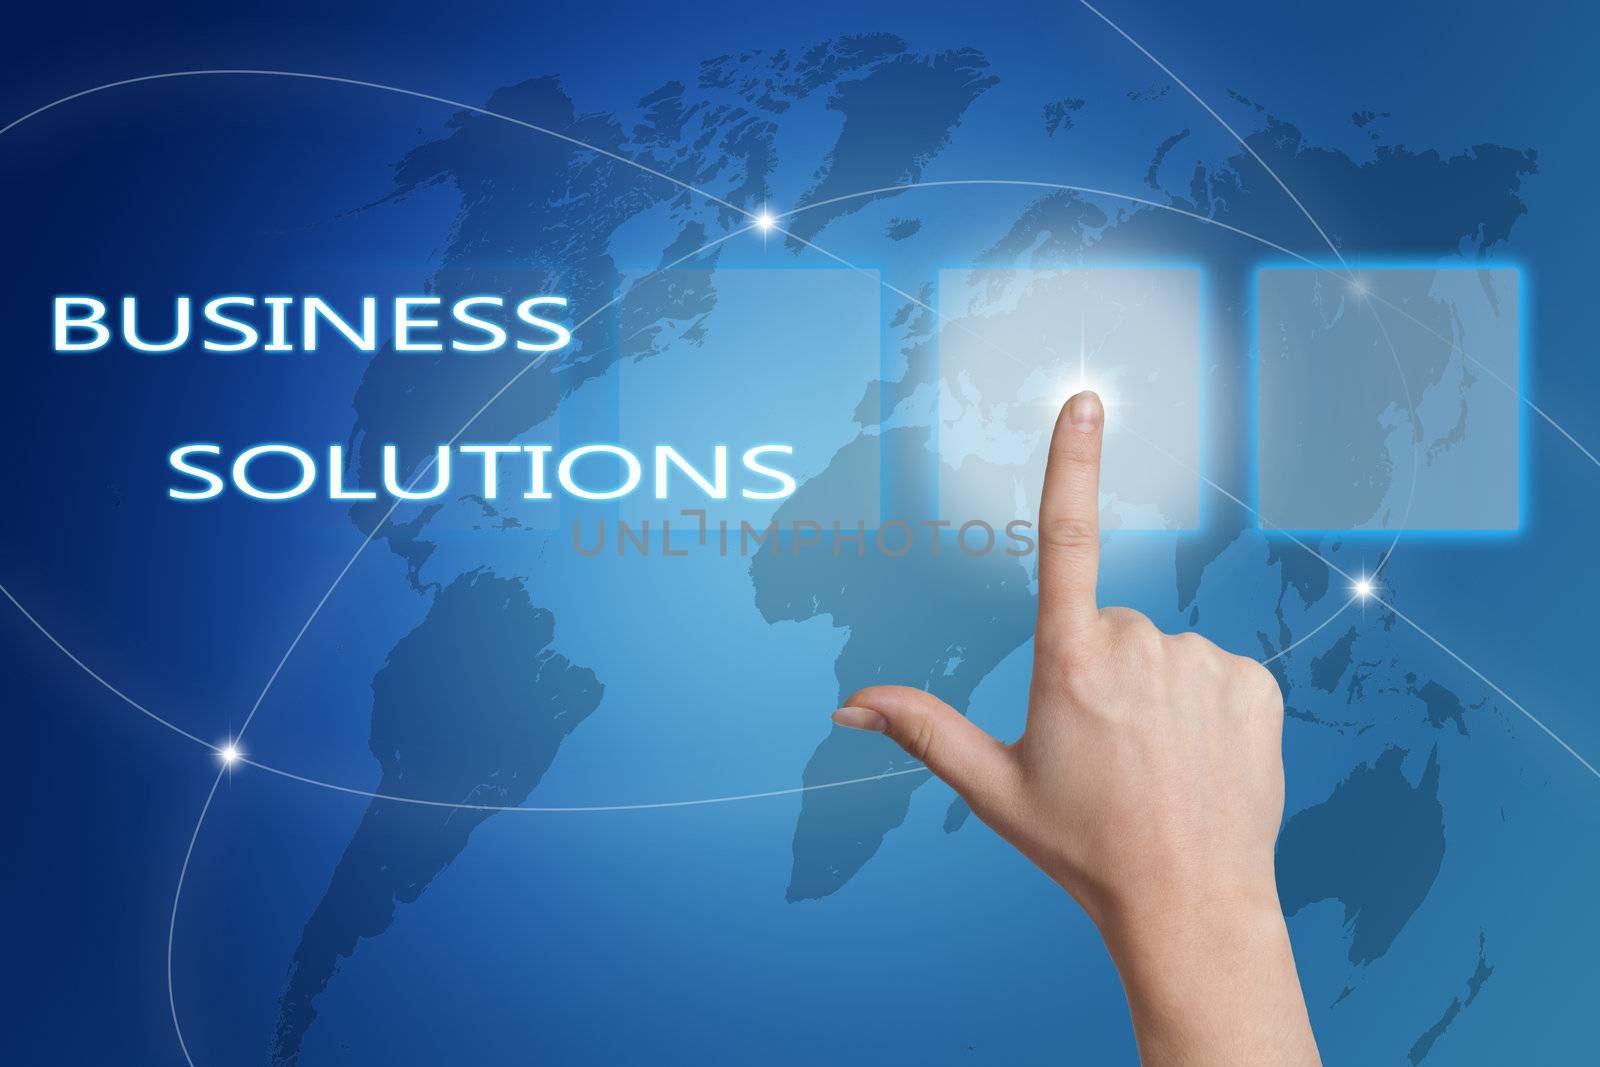 Business Solutions by Mazirama